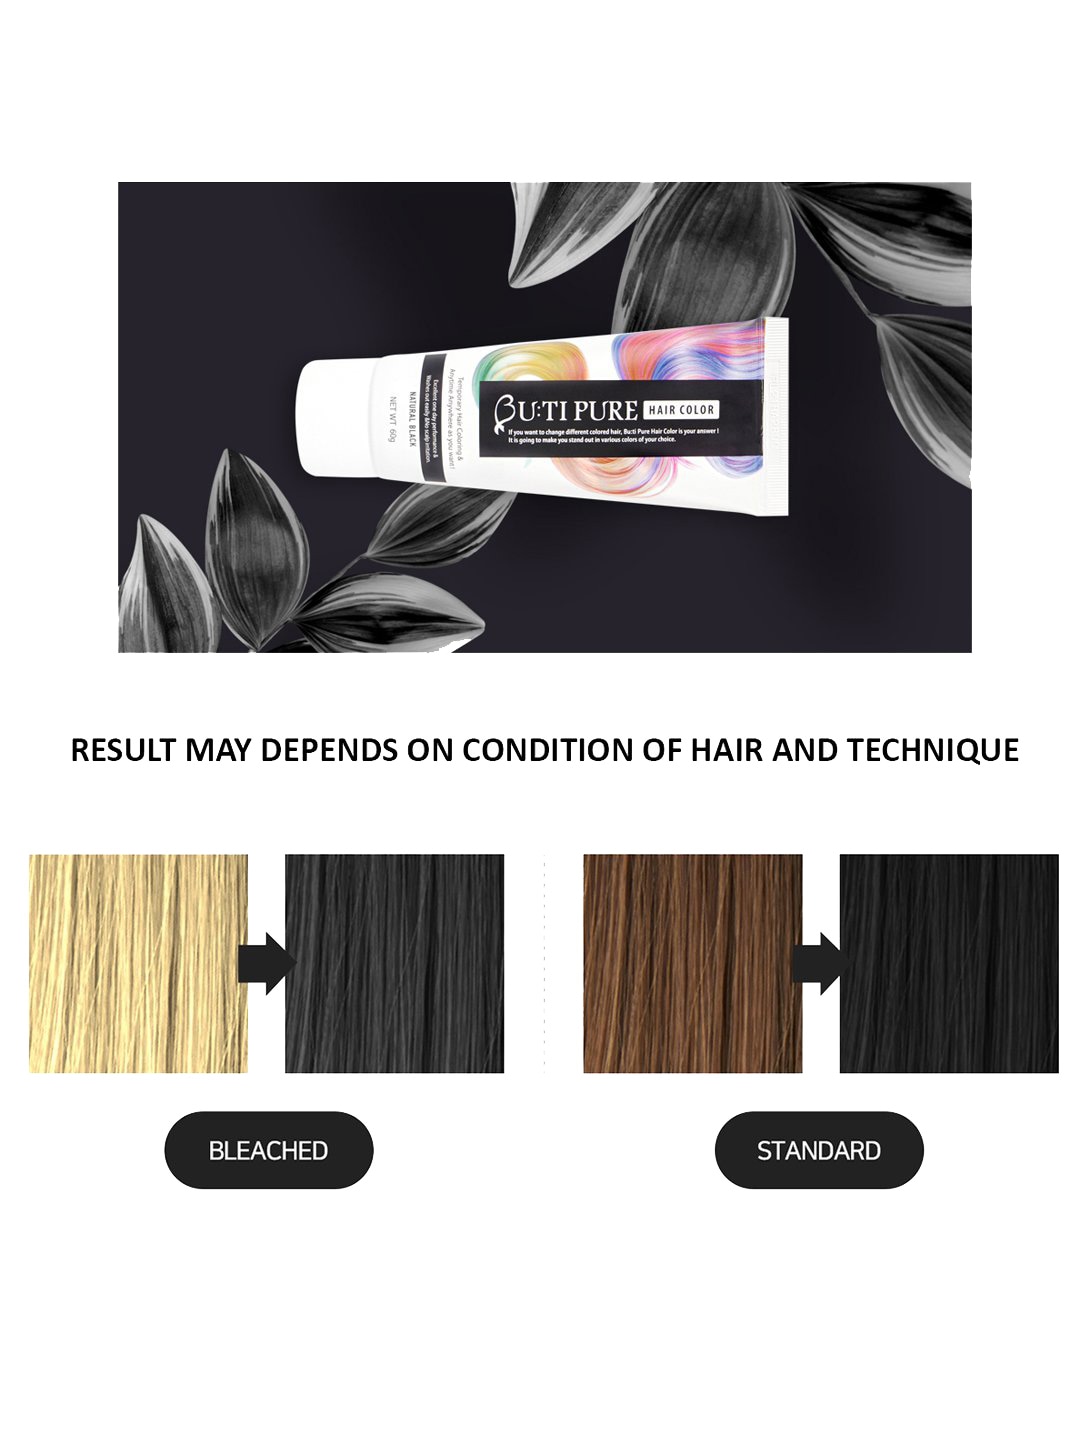 Butipure Semi Permanent Hair Color 60 ml - Natural Black Price in India